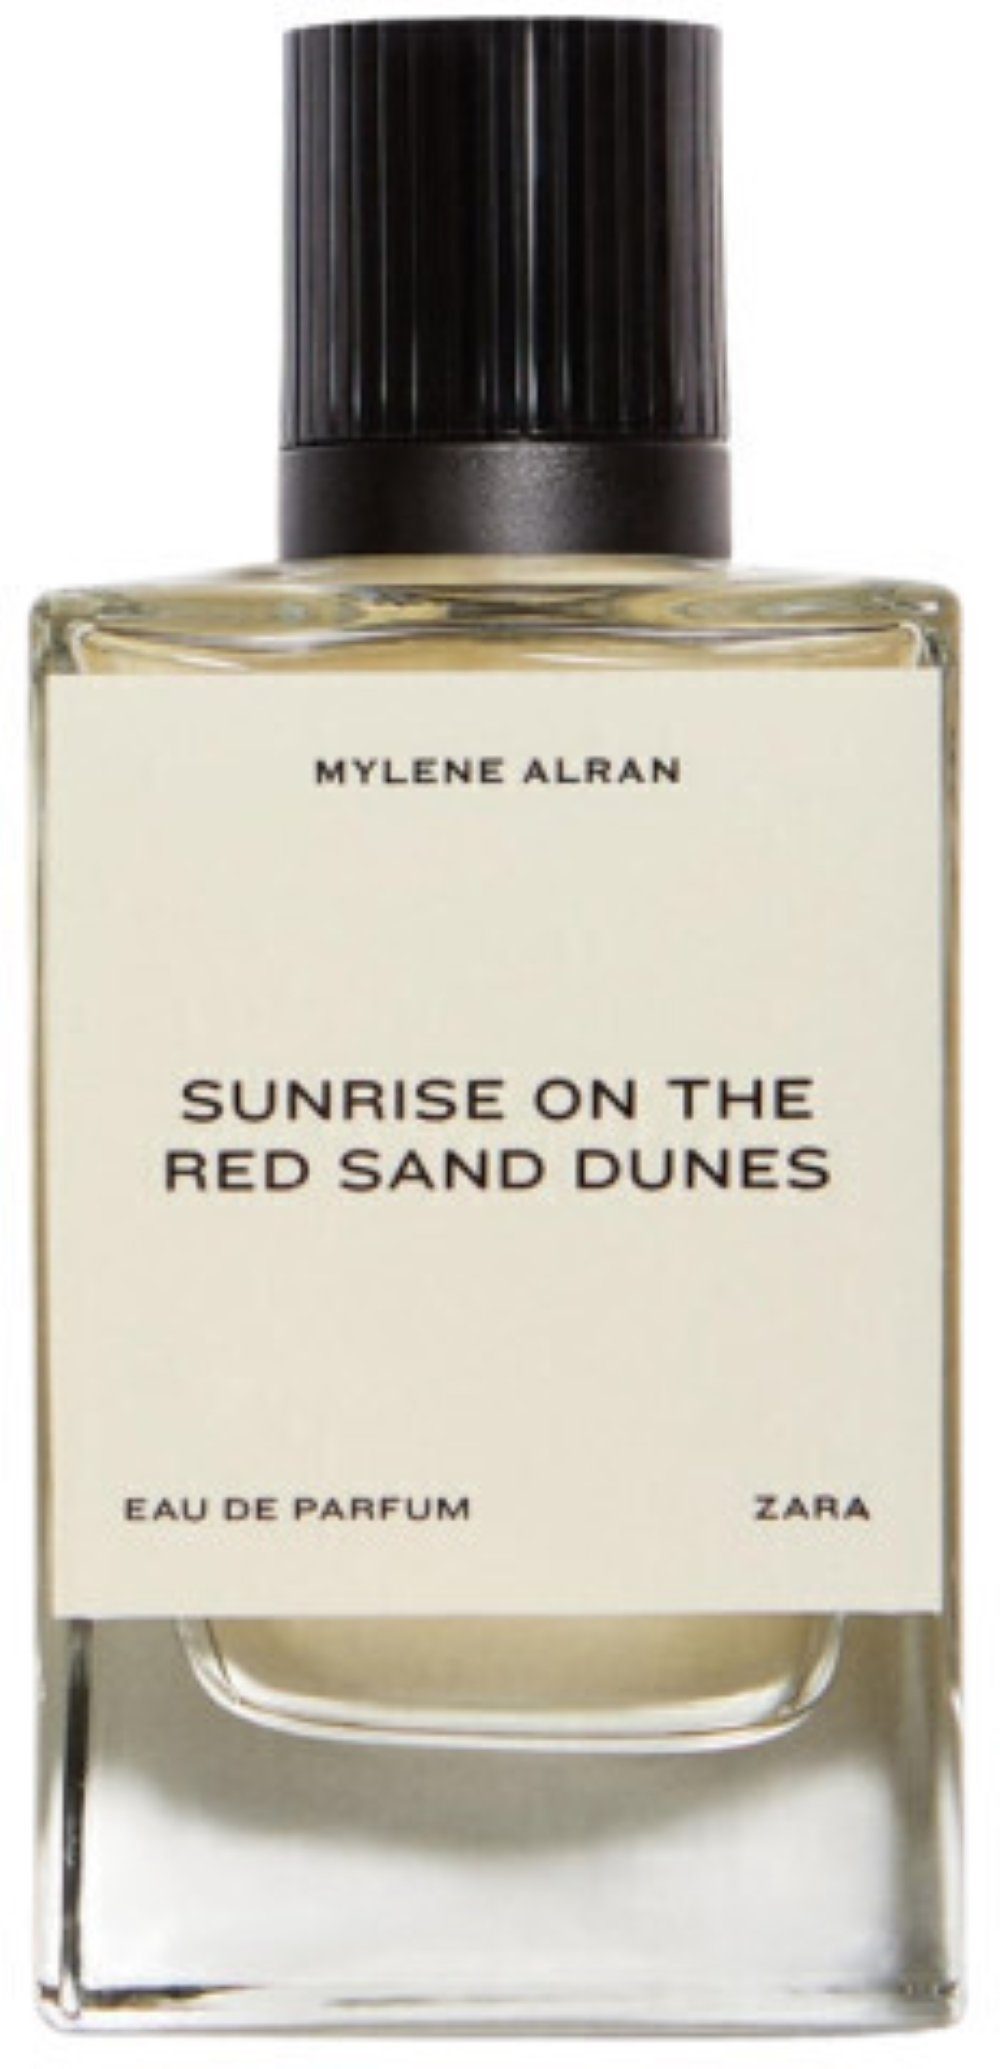 Sunrise on the Red Sand Dunes - ZARA